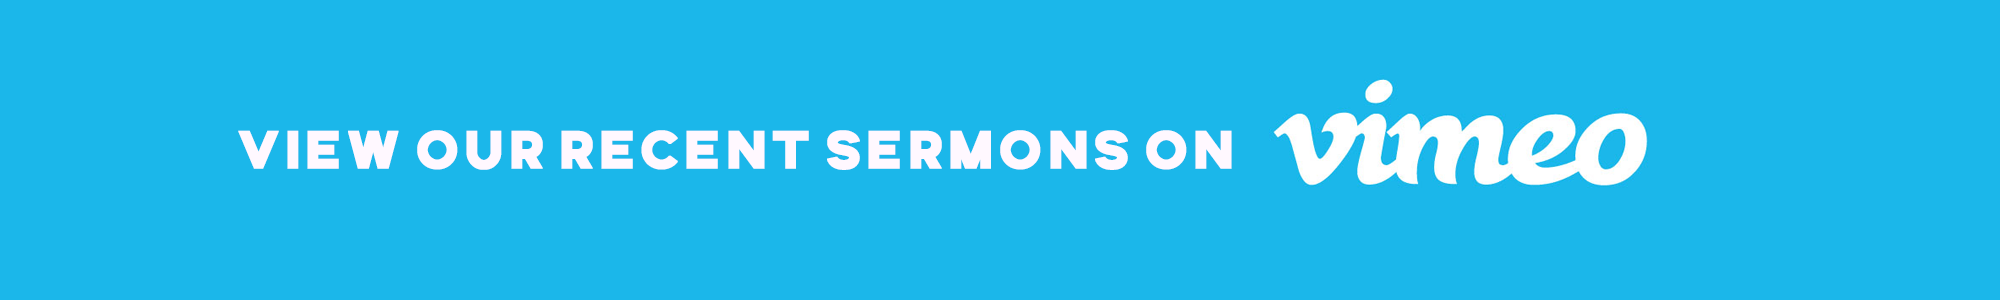 View recent sermons on vimeo